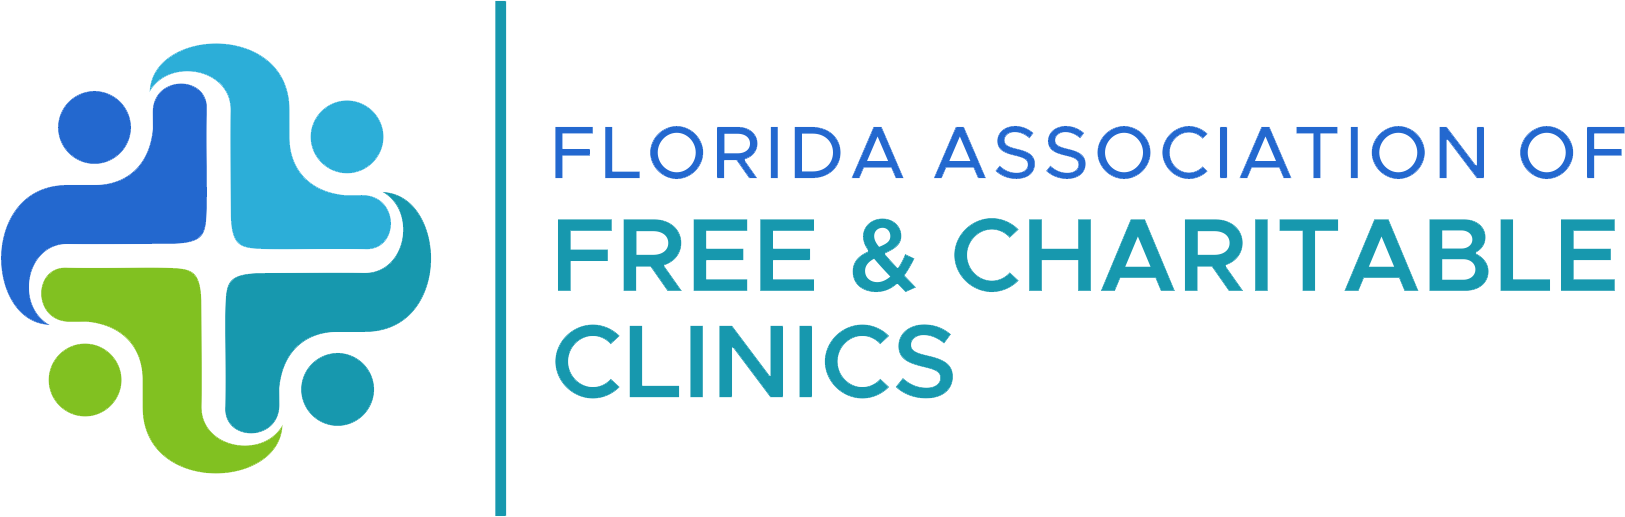 Florida Association of Free and Charitable Clinics Logo